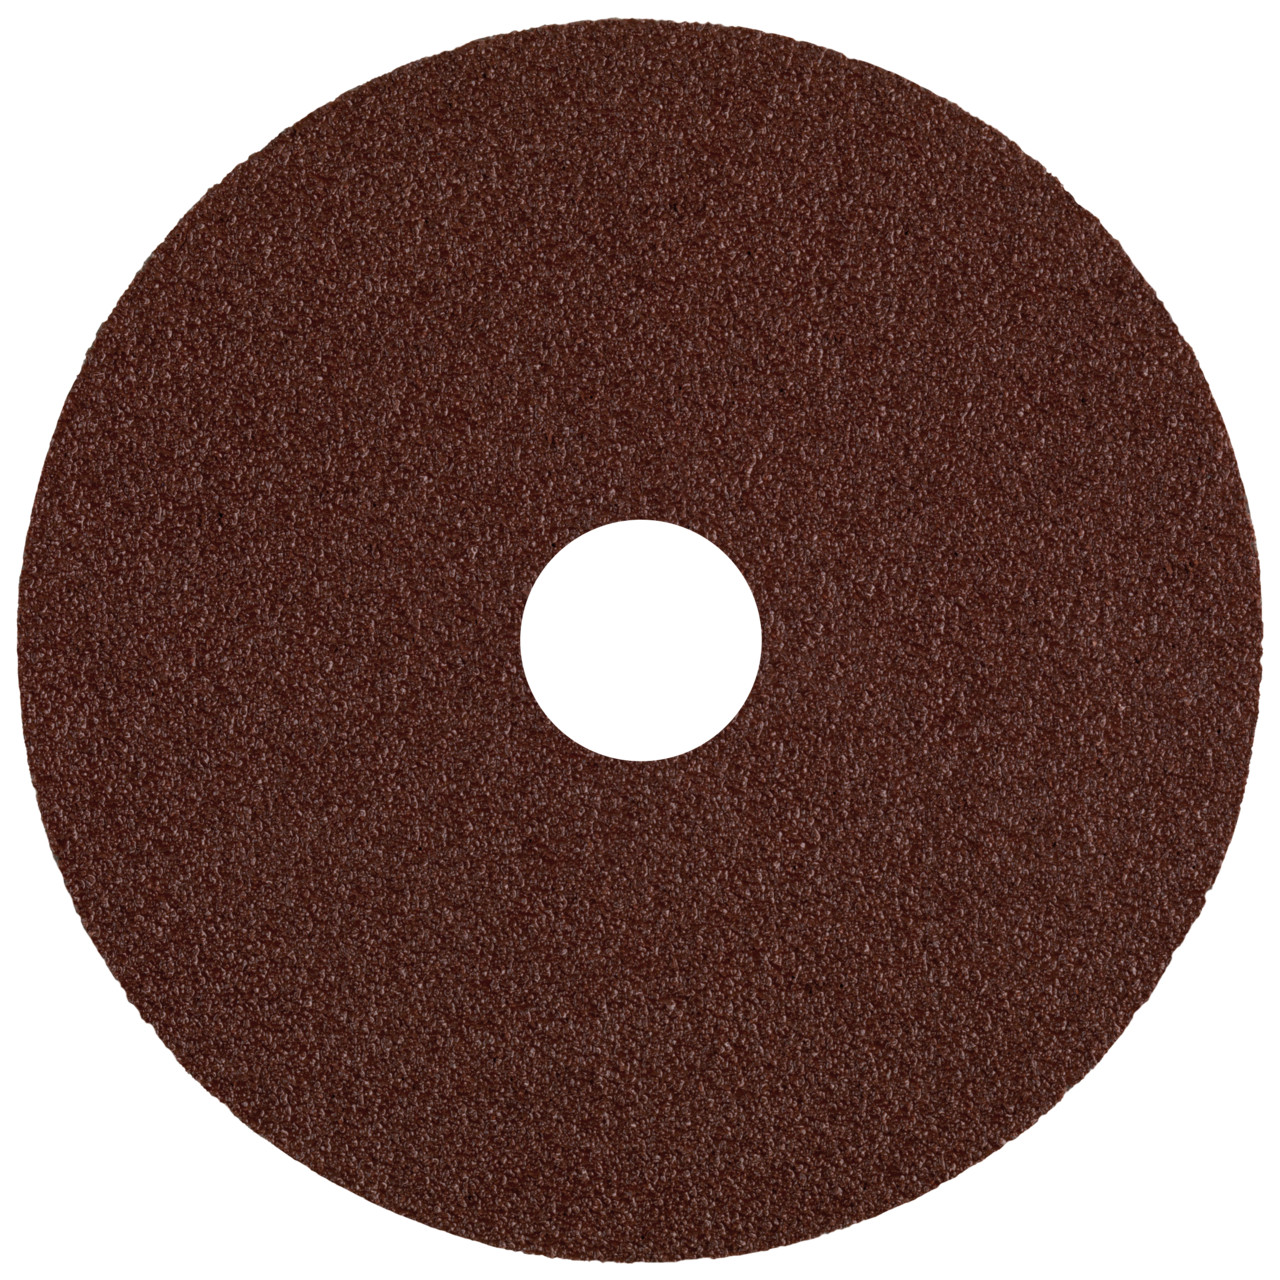 Tyrolit A-B02 V Vulcanised fibre disc DxH 115x22 For steel, non-ferrous metals and wood, P24, shape: DISC, Art. 34286491